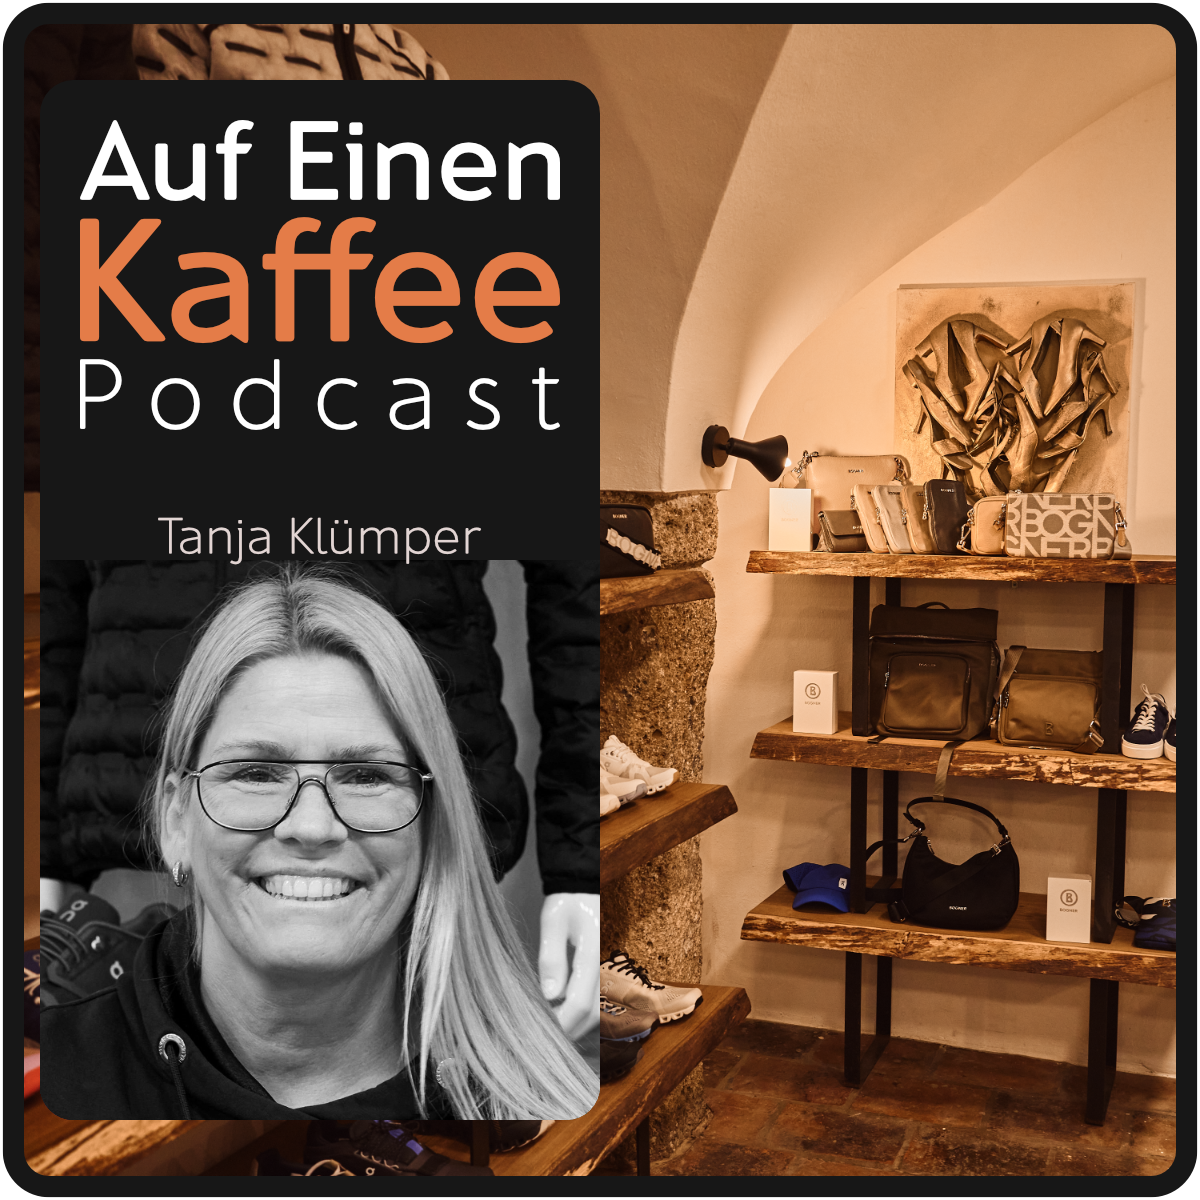 Cover Cafe006 - Tanja Klümper - Goldinni - AufEinenKaffee - Podcast - Mark1